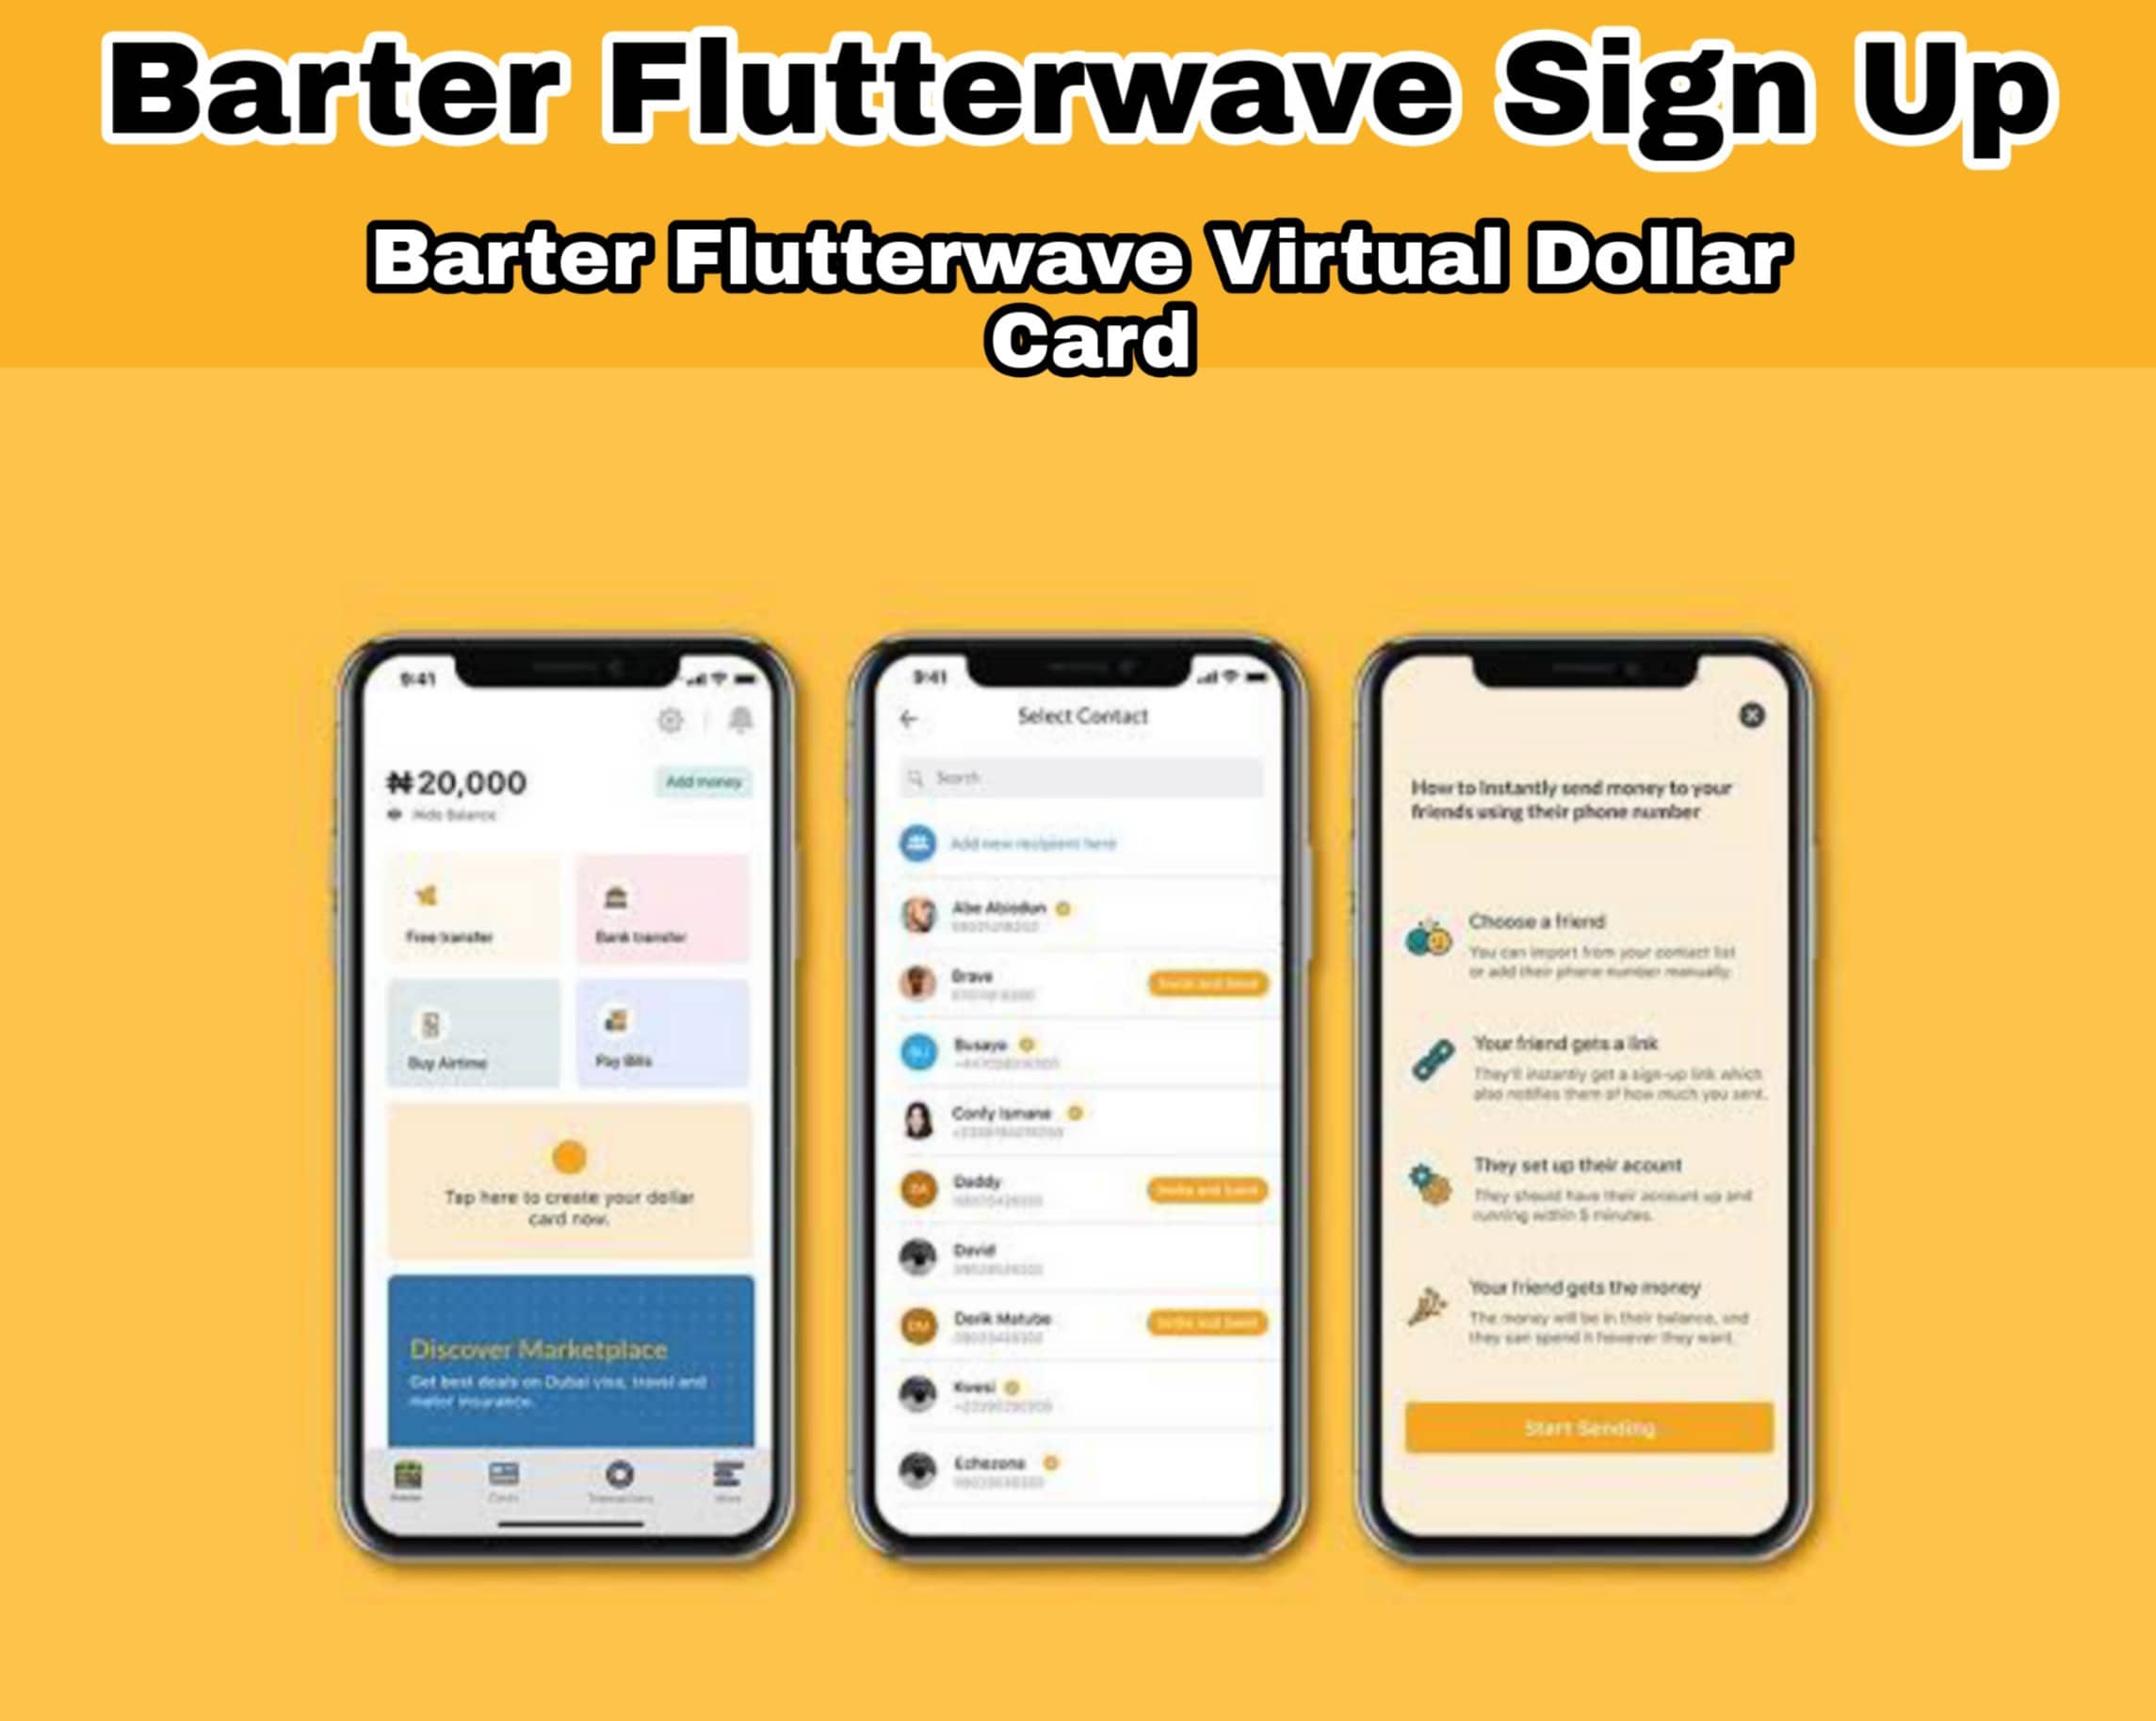 Barter Flutterwave Sign Up, Login, Create Account |Barter Flutterwave Virtual Dollar Card